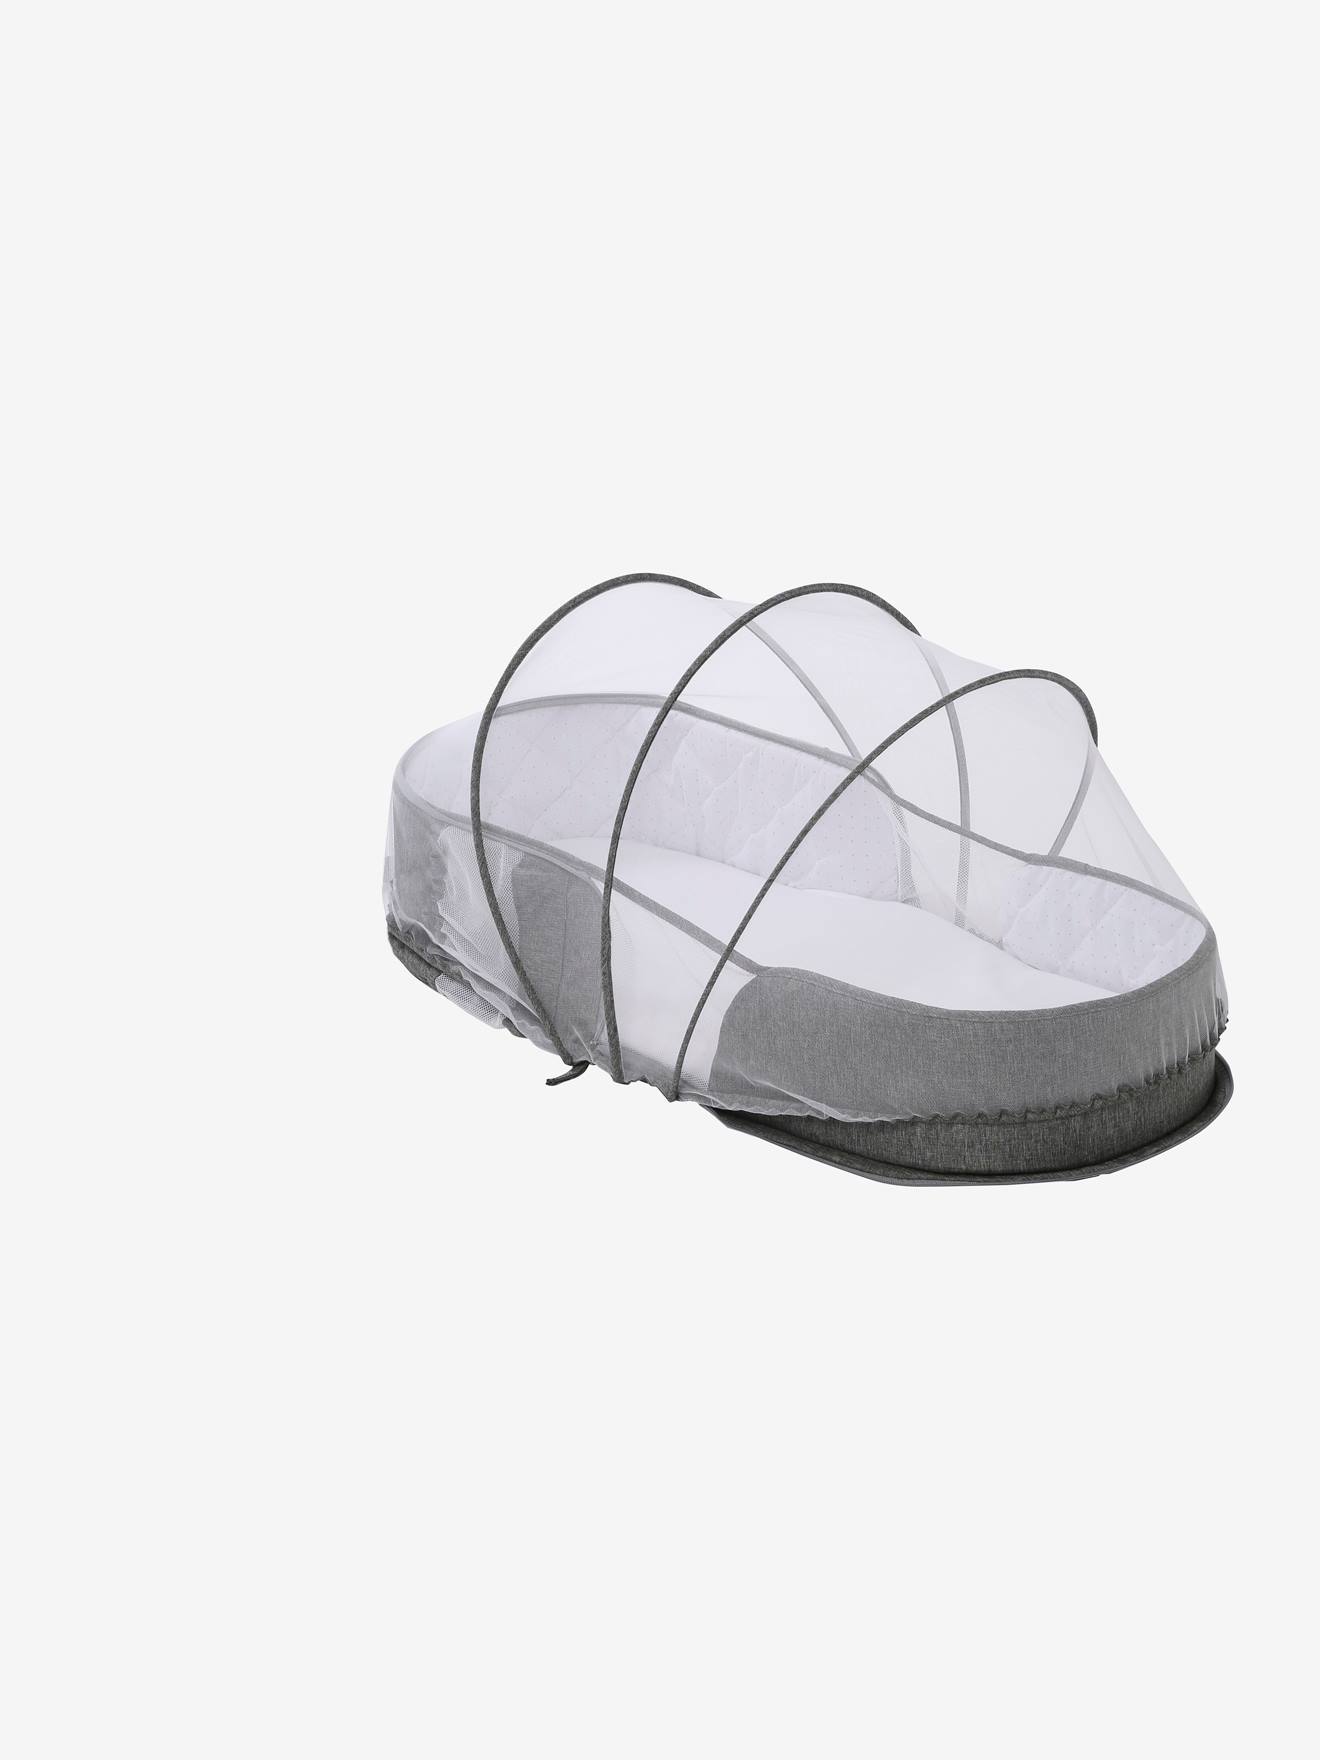 Foldable Travel Carrycot by Vertbaudet - light grey, Nursery